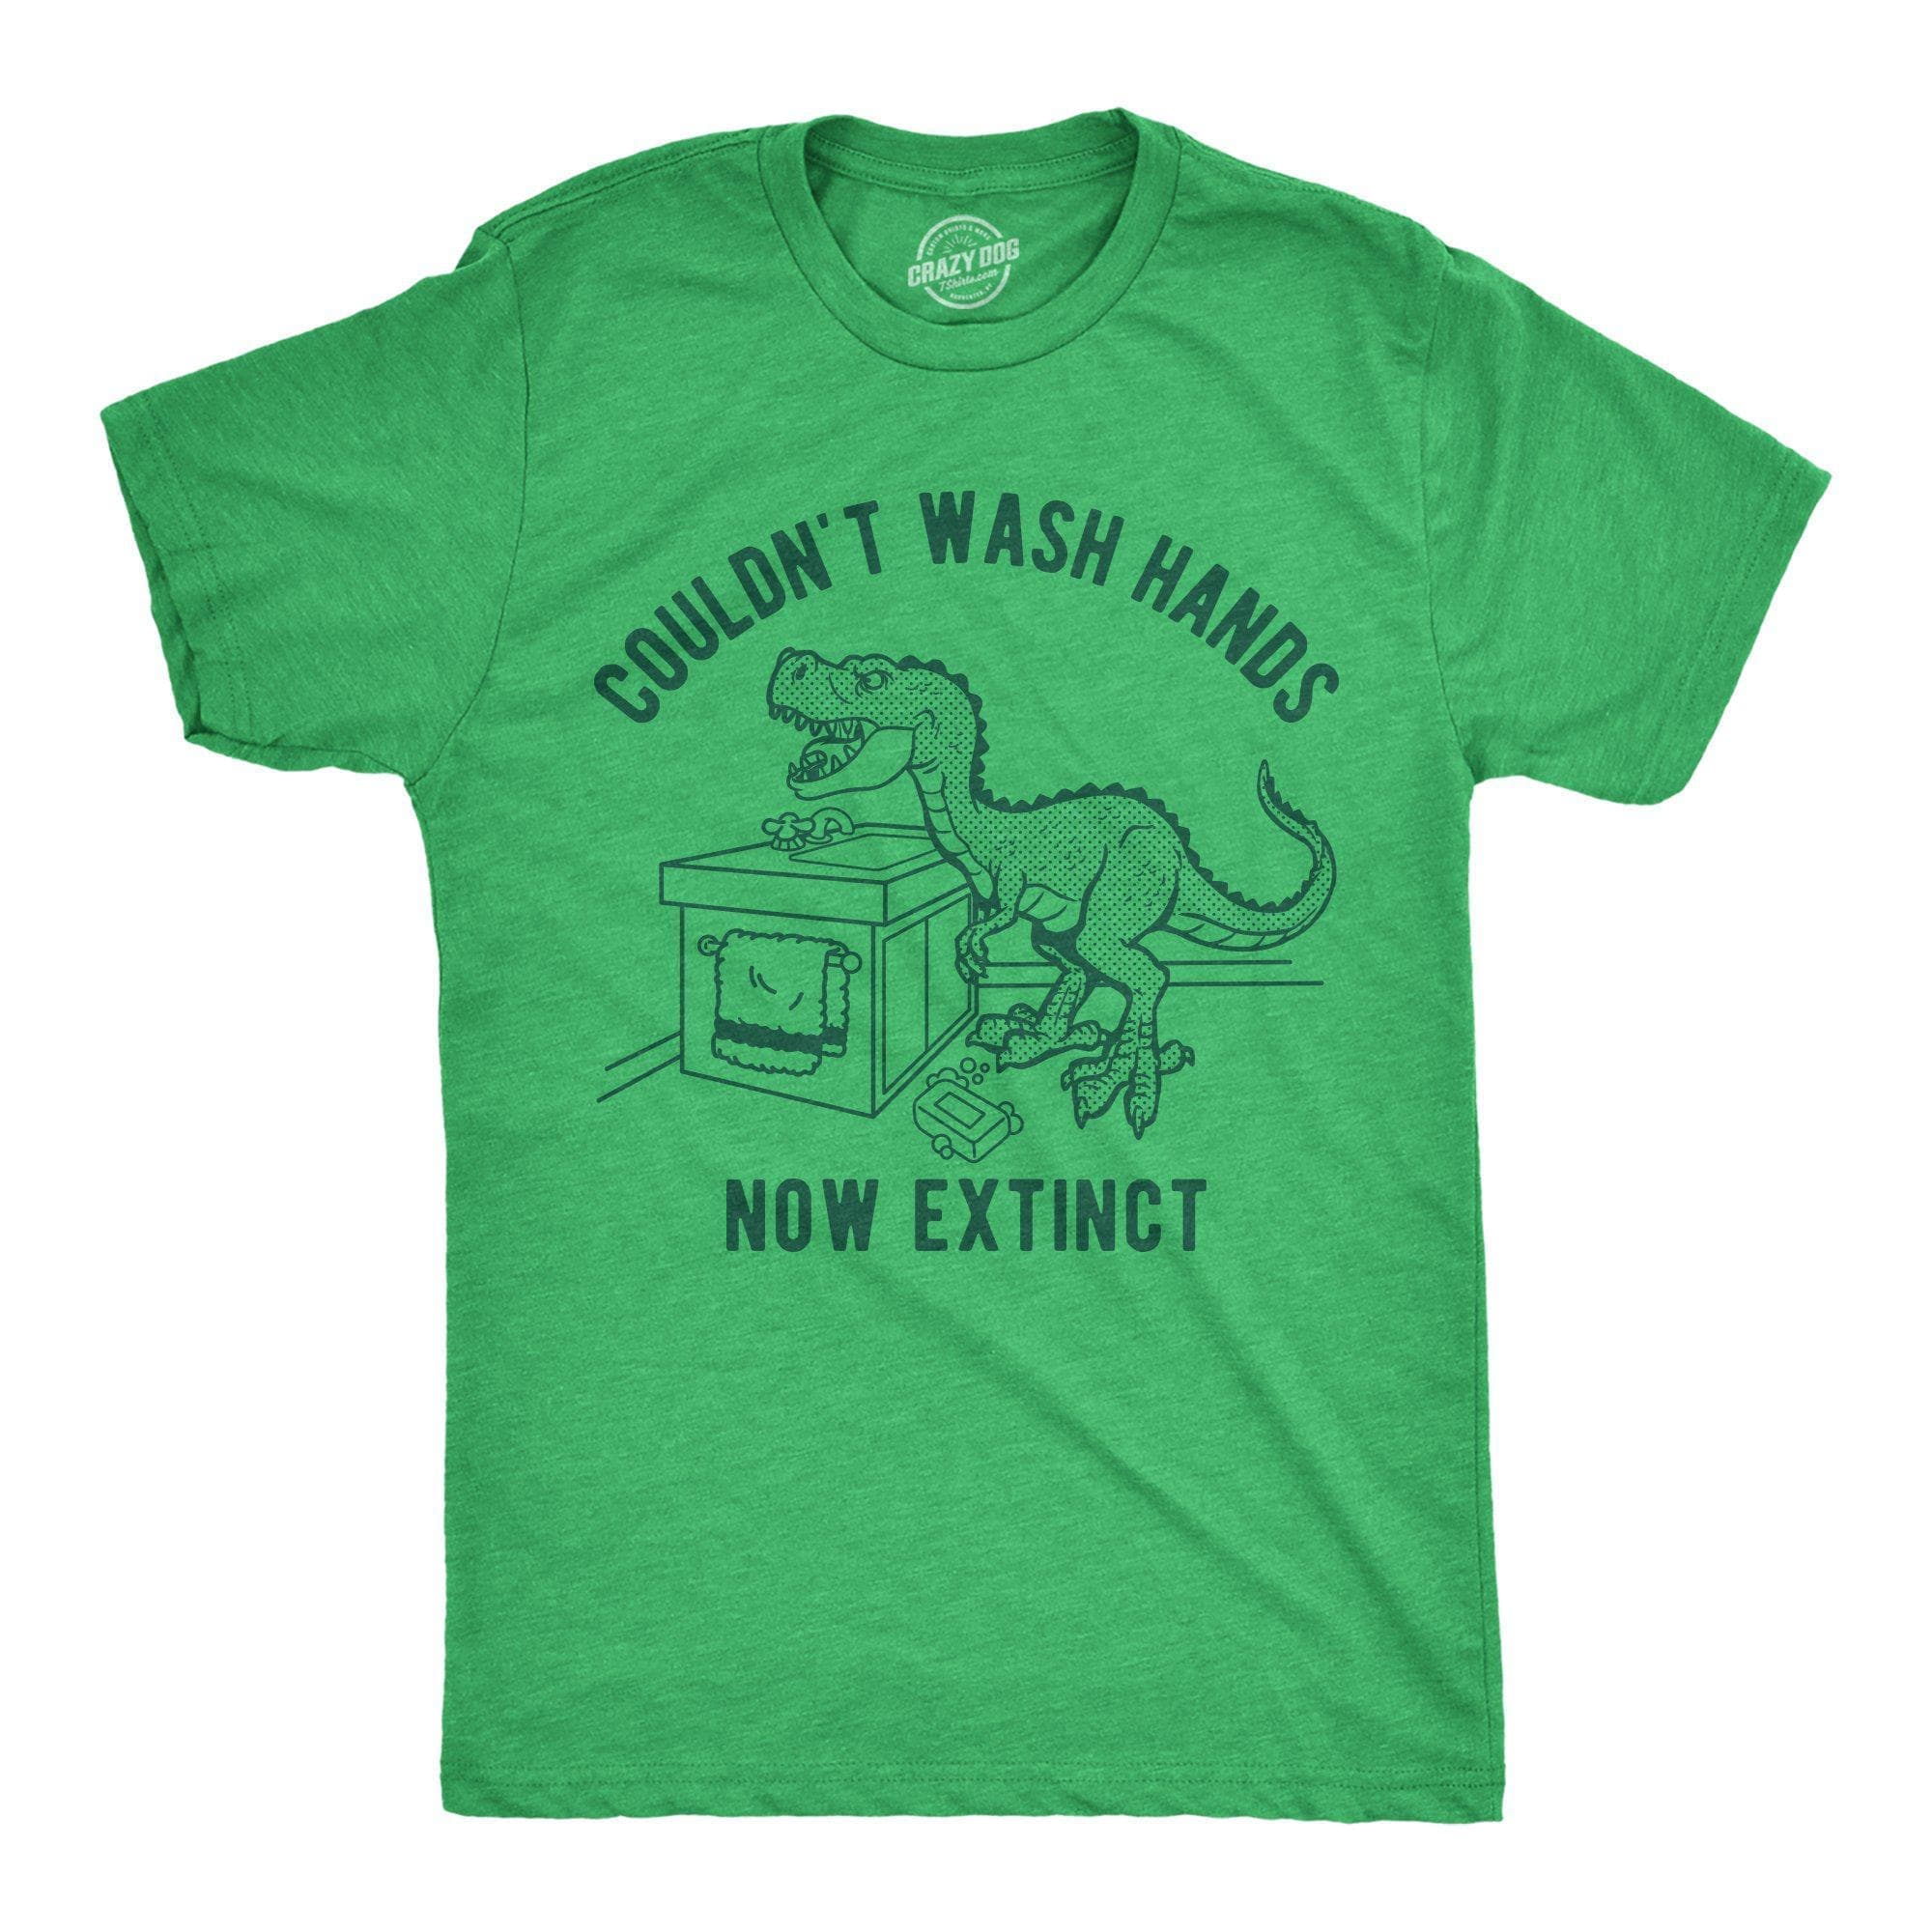 Couldn't Wash Hands Now Extinct Men's Tshirt - Crazy Dog T-Shirts